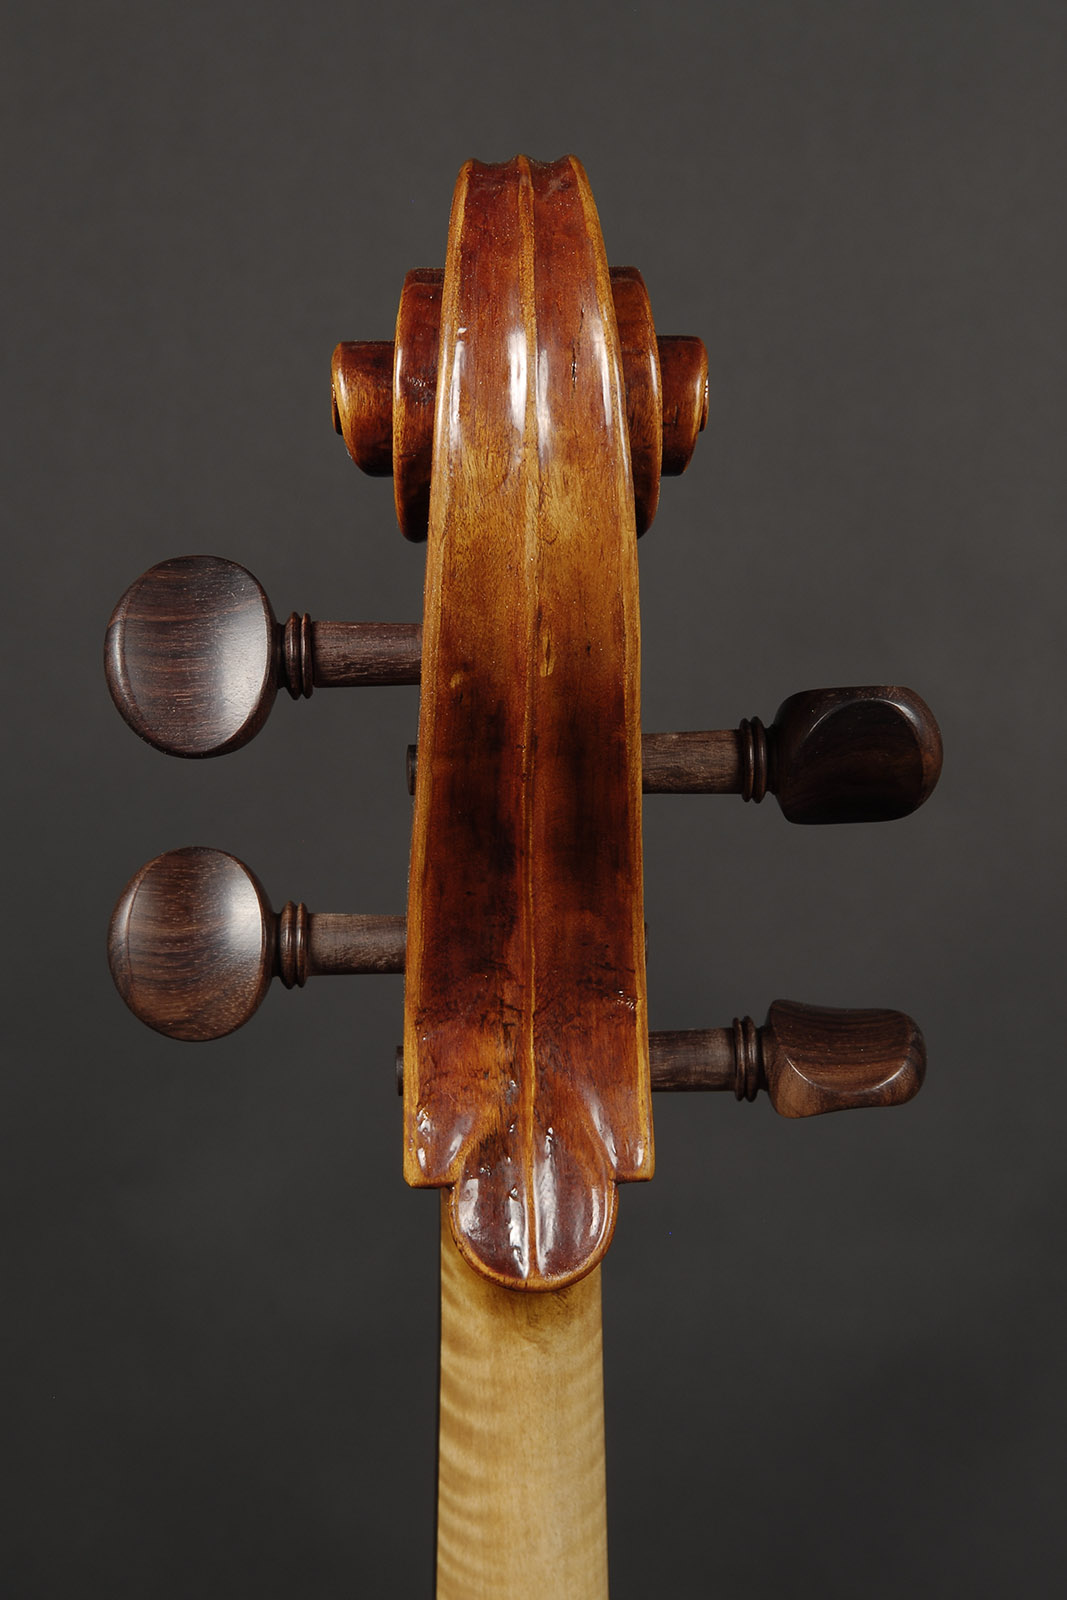 Antonio Stradivari Cremona 1730 “Feuermann“ “Maremmano“ - Image 7